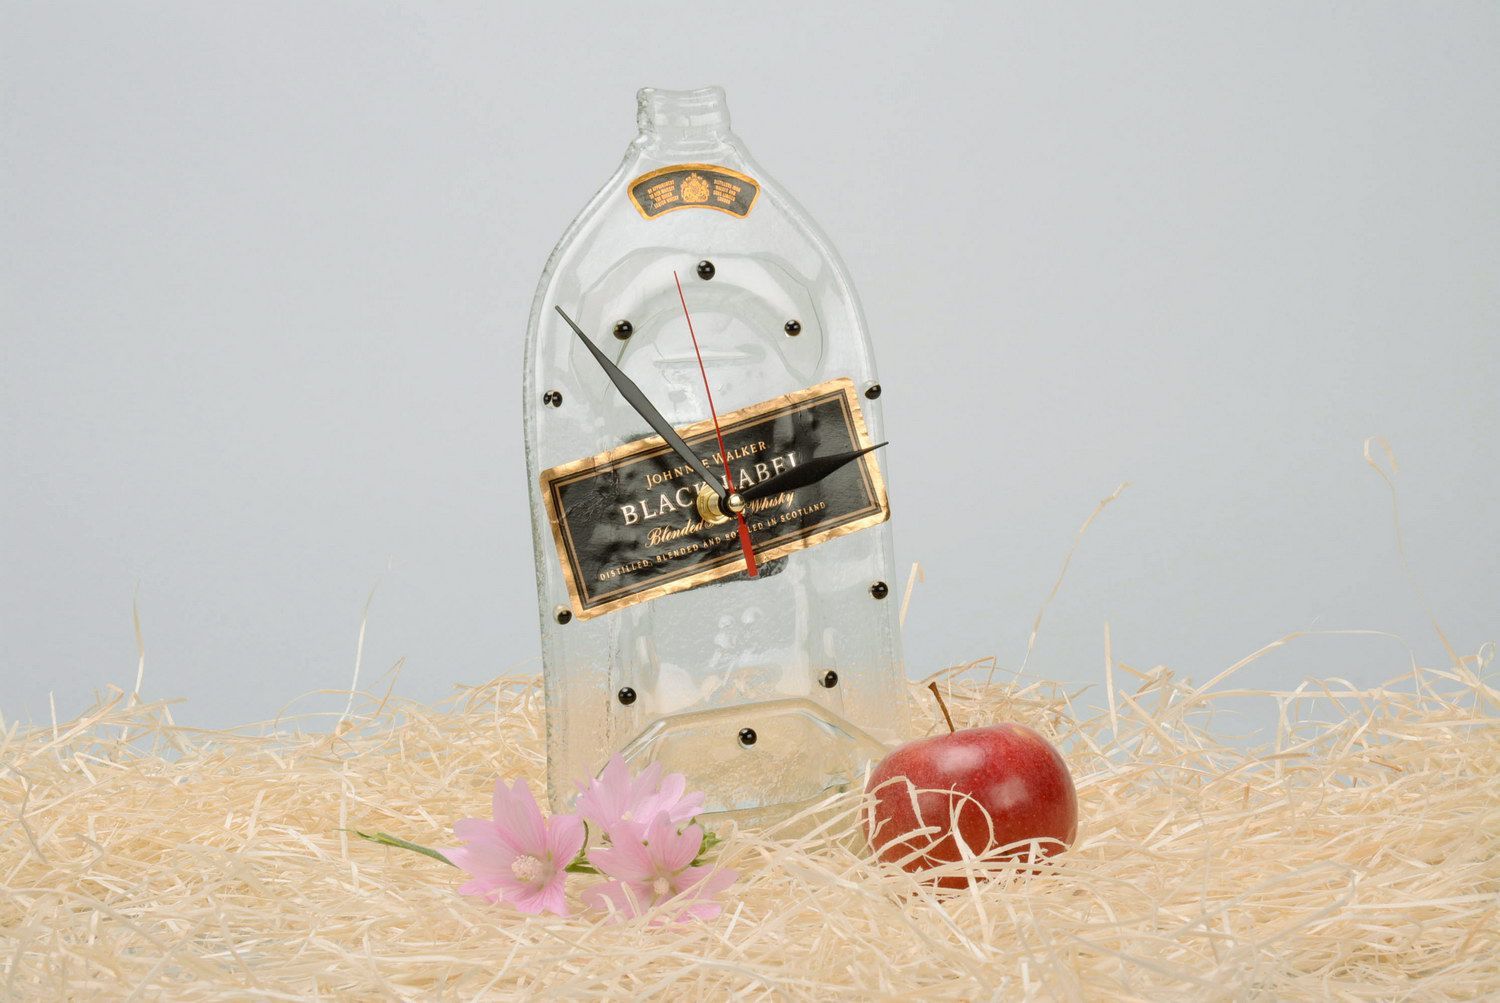 Reloj de botella “Black label” foto 4